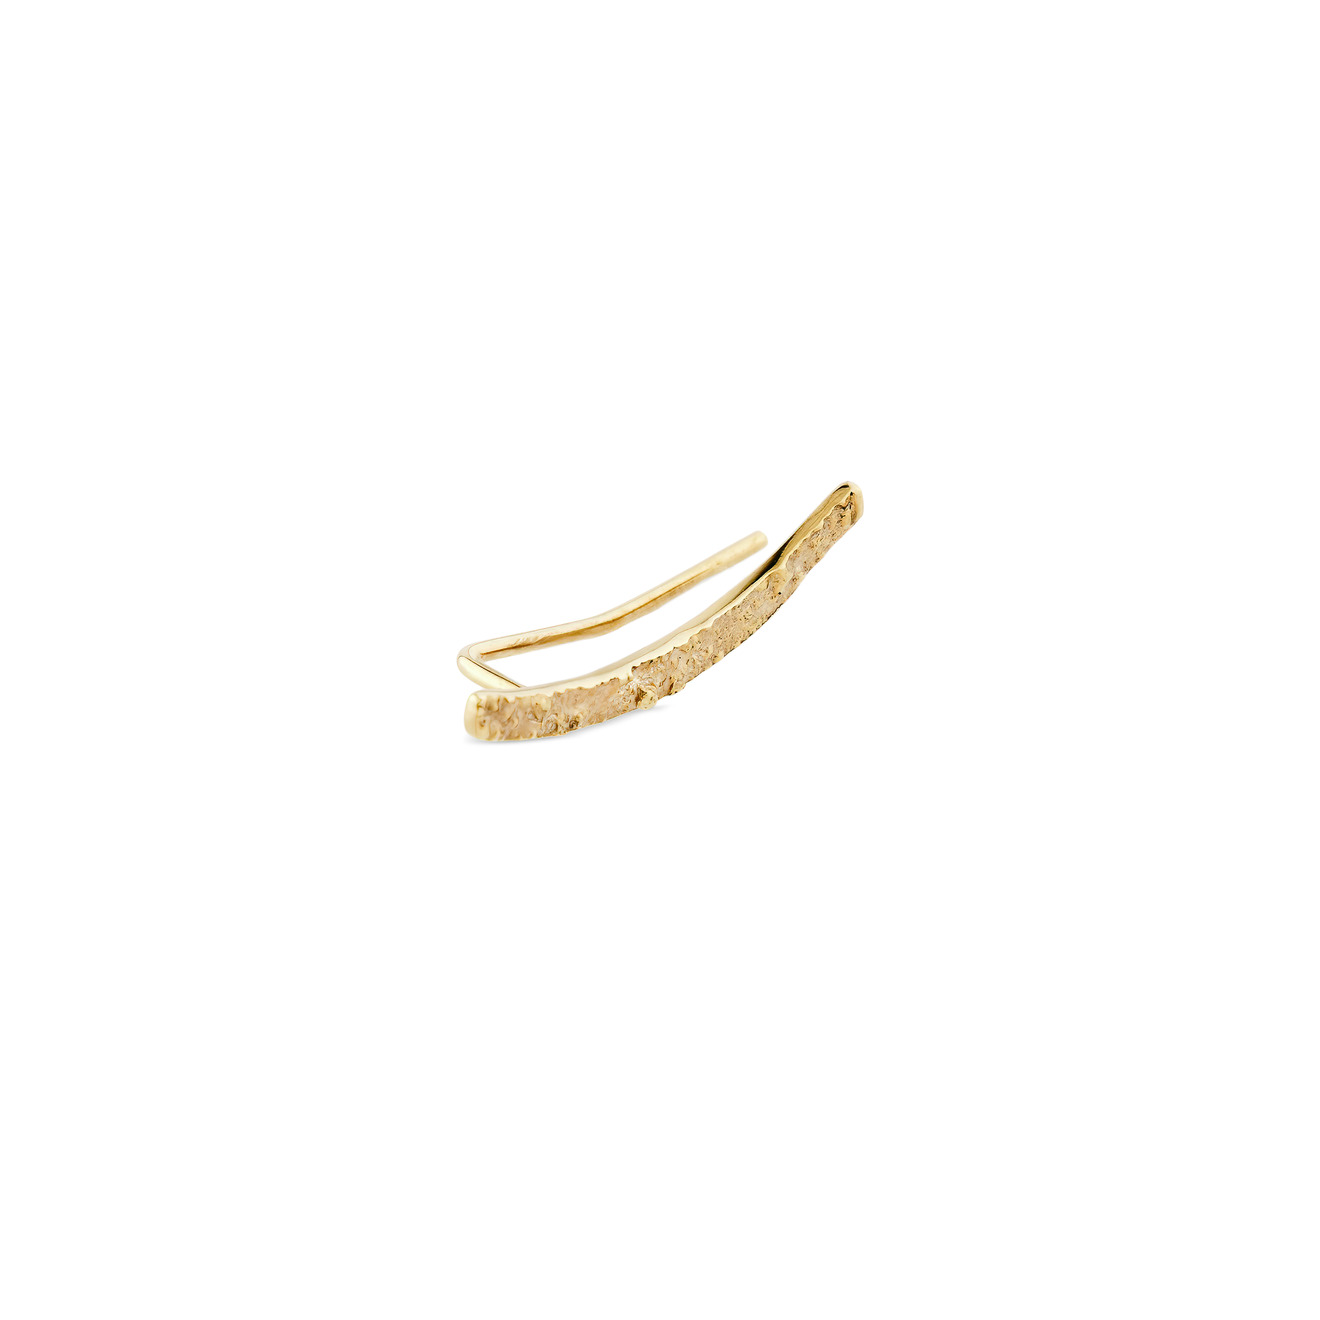 УРА jewelry Позолоченный клаймбер из серебра на левое ухо